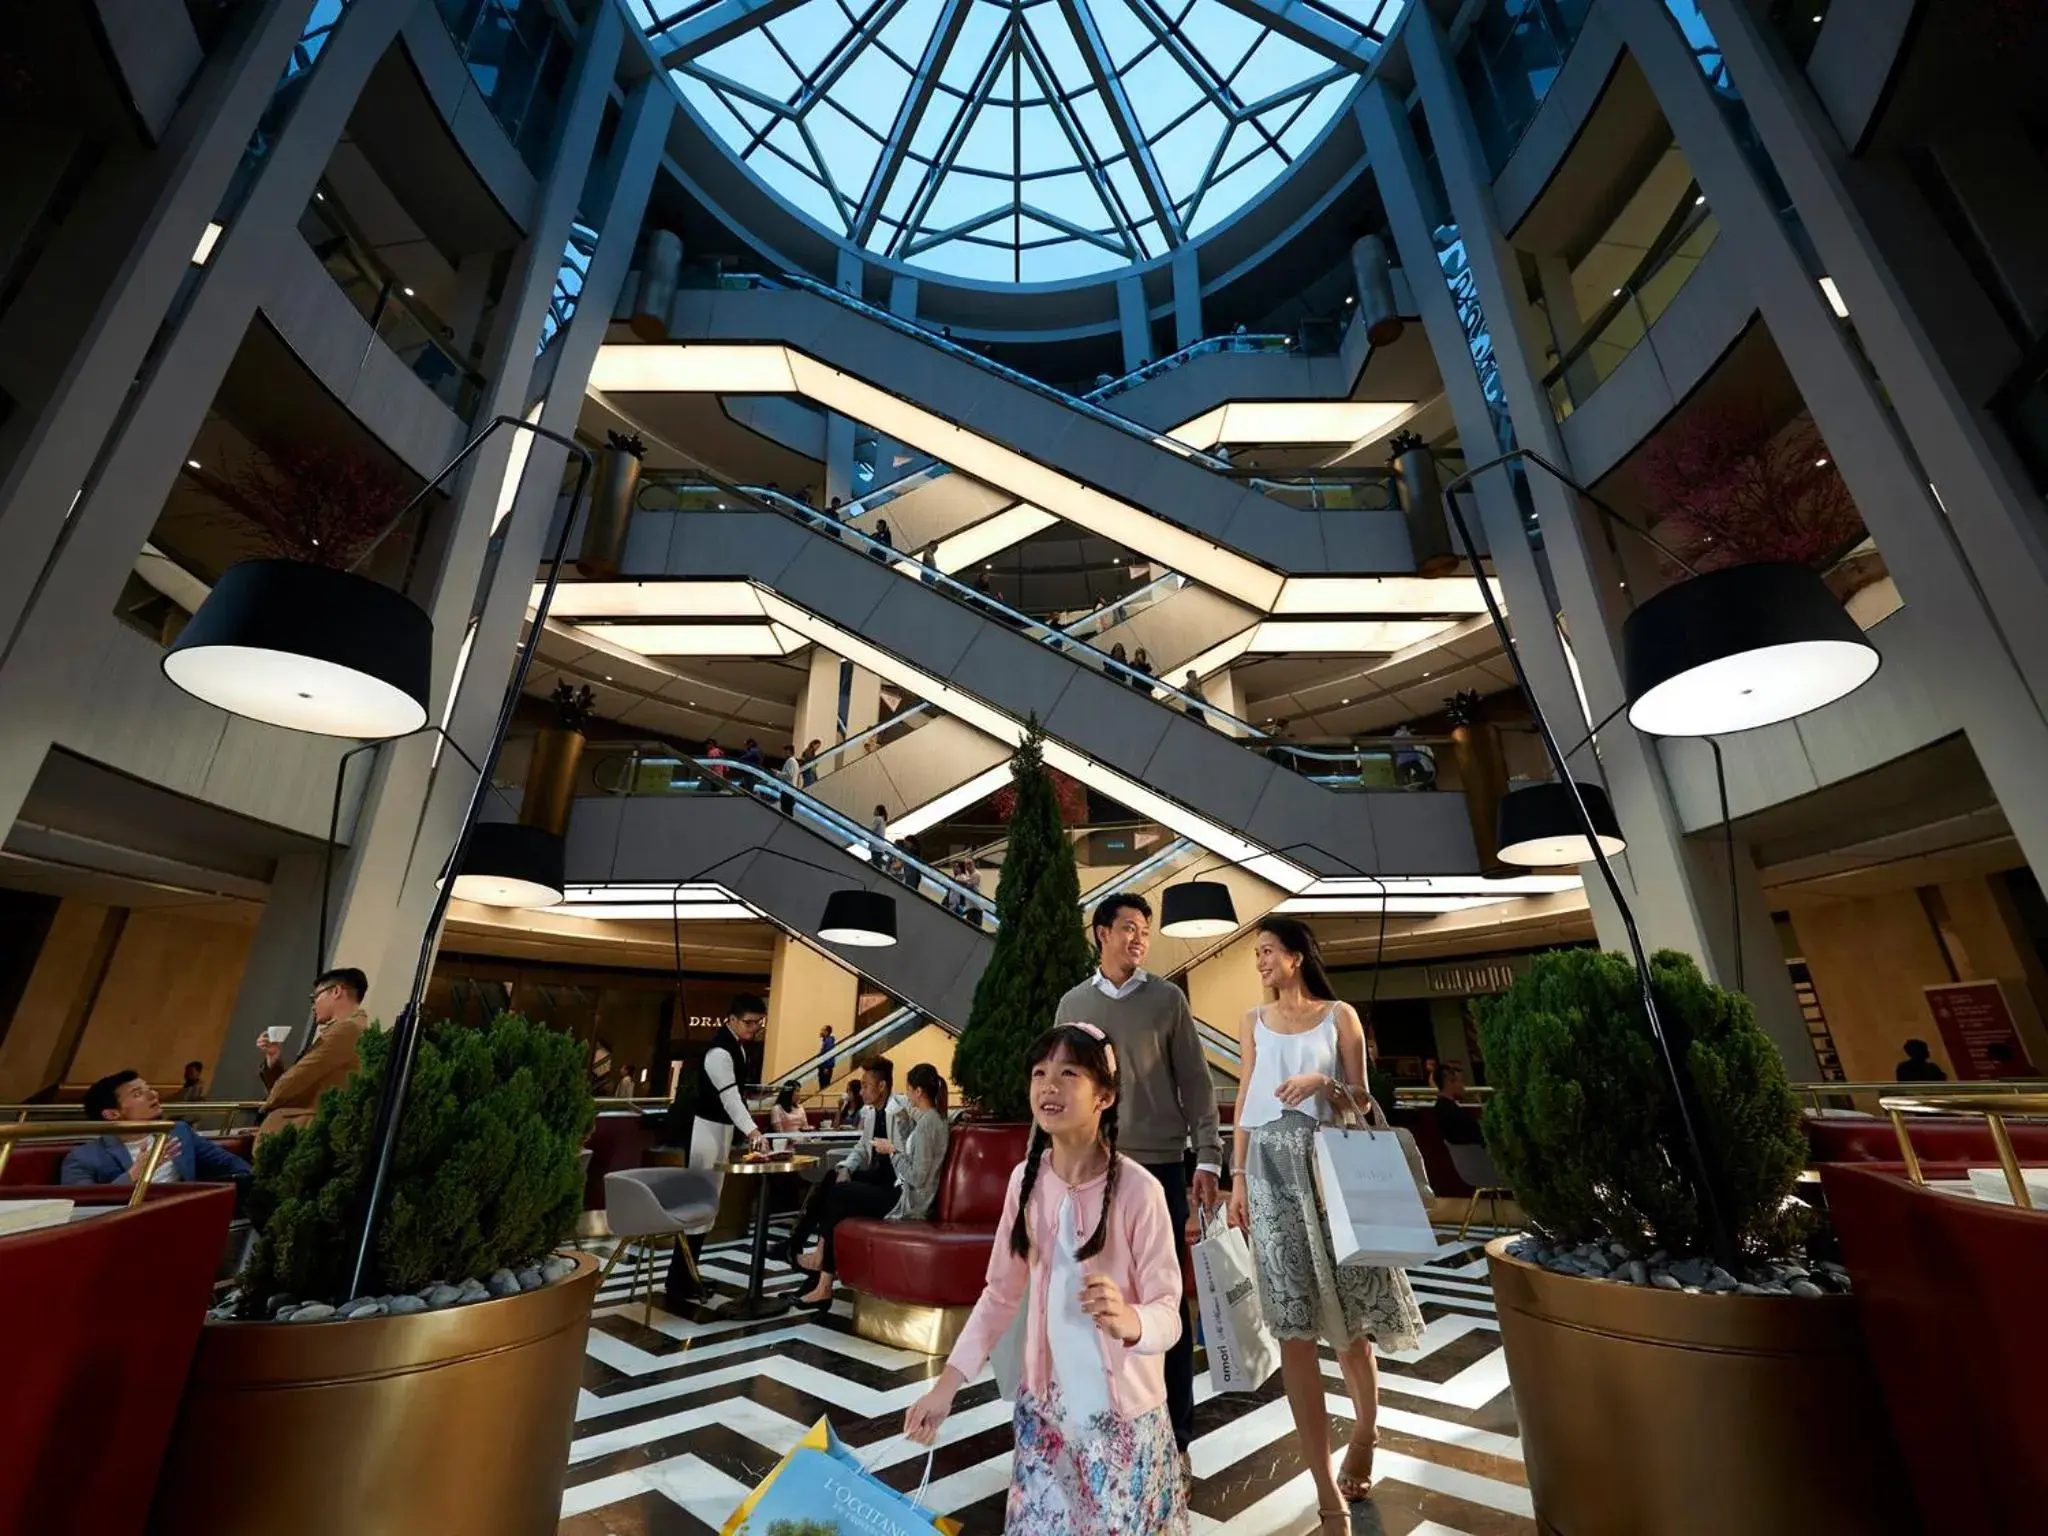 Resorts World Genting - First World Hotel